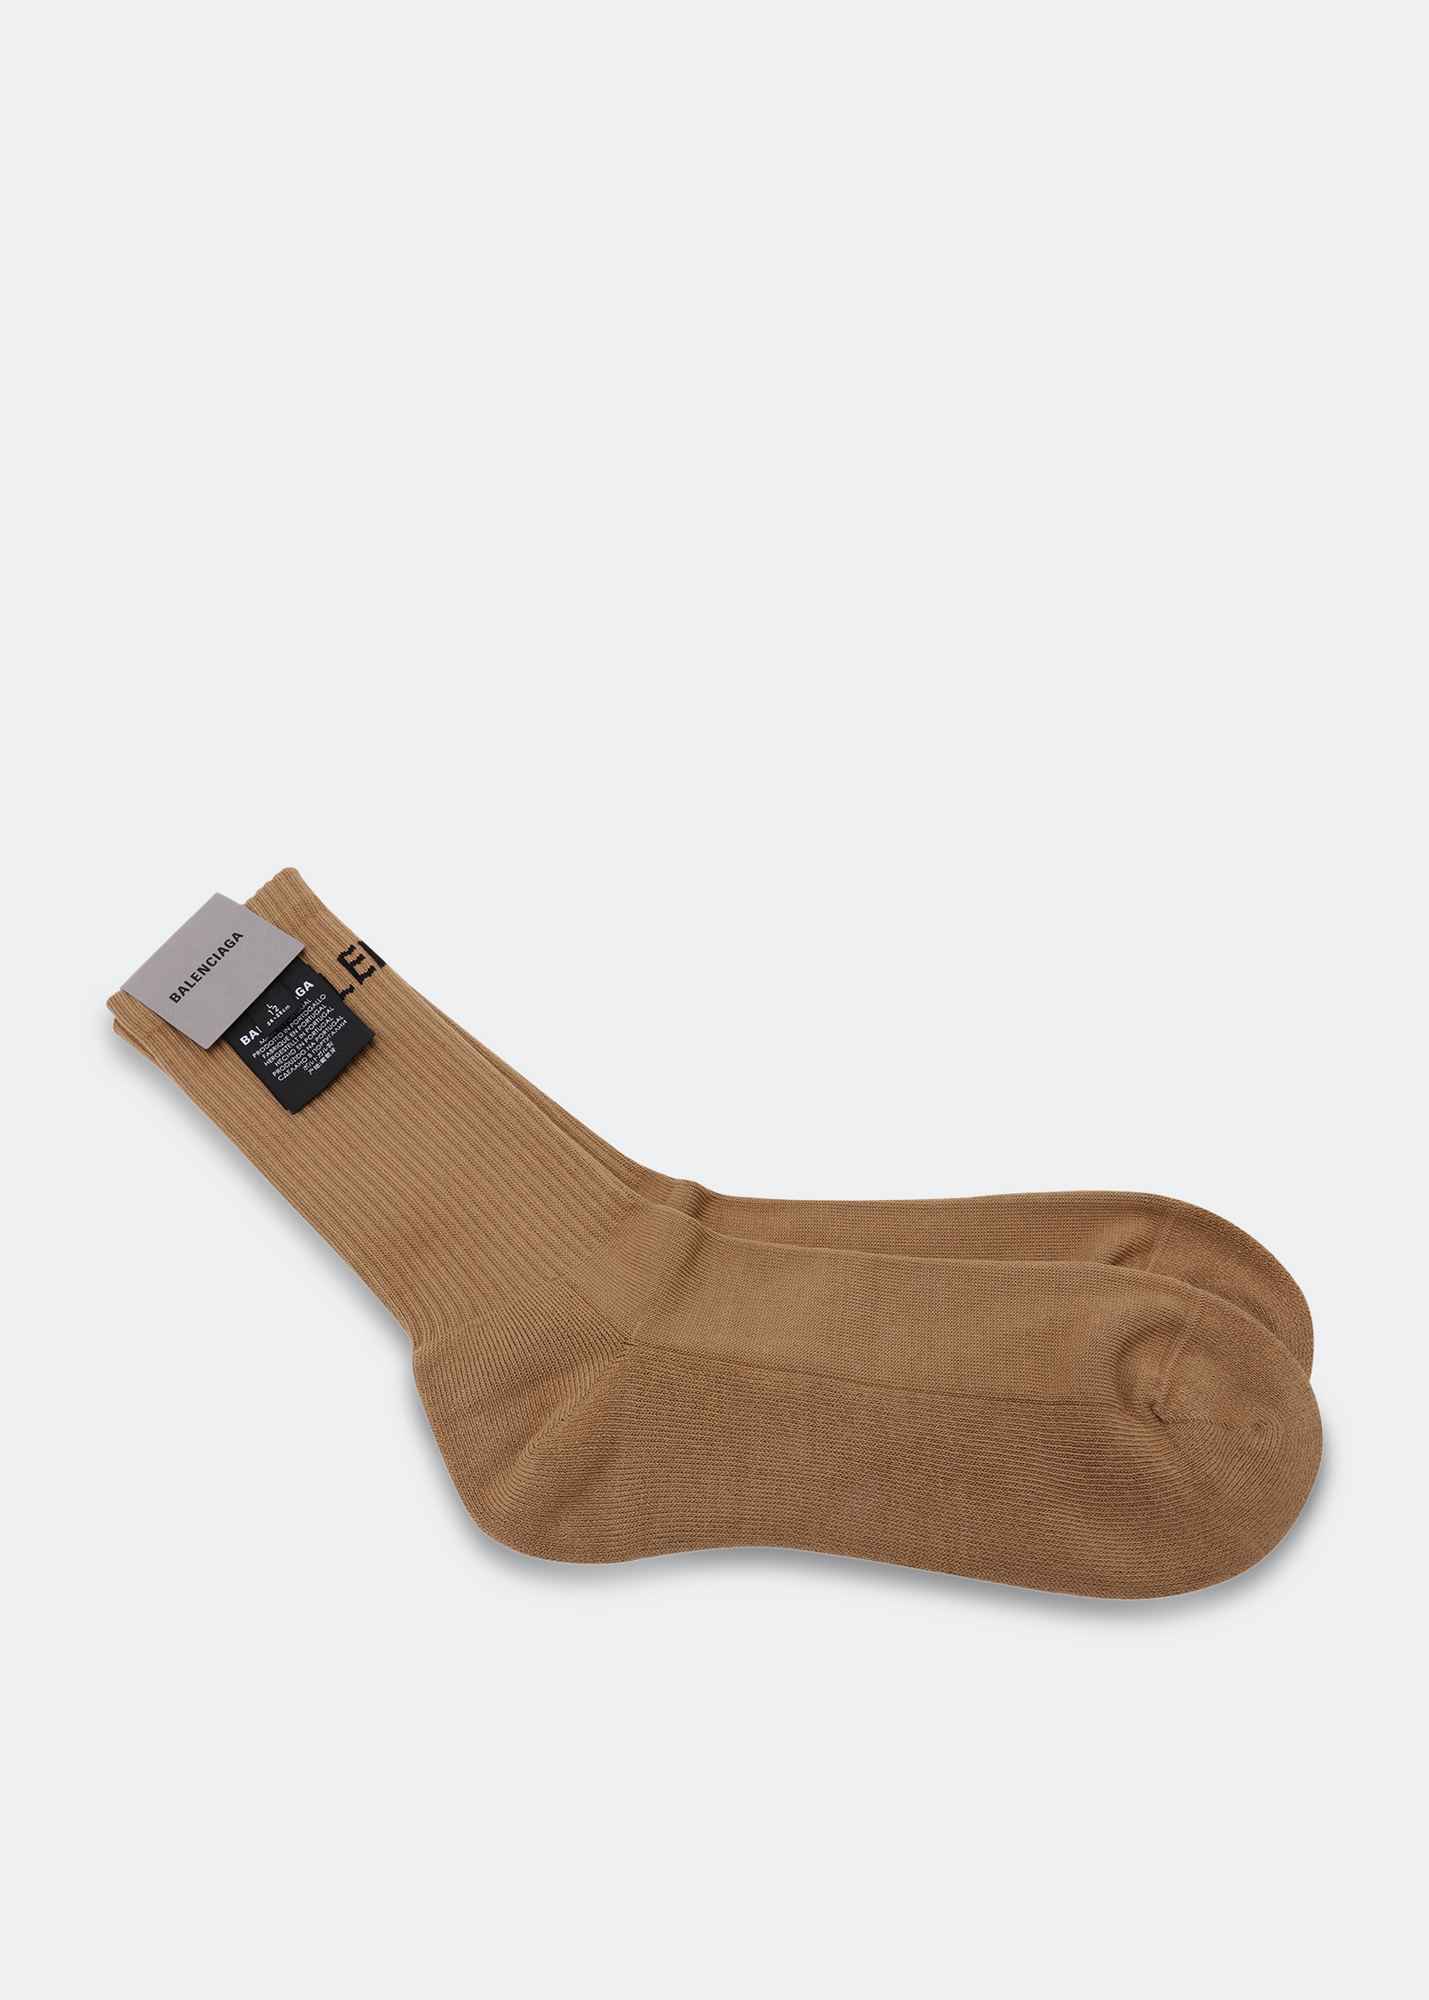 Balenciaga Monogram Socks in Brown